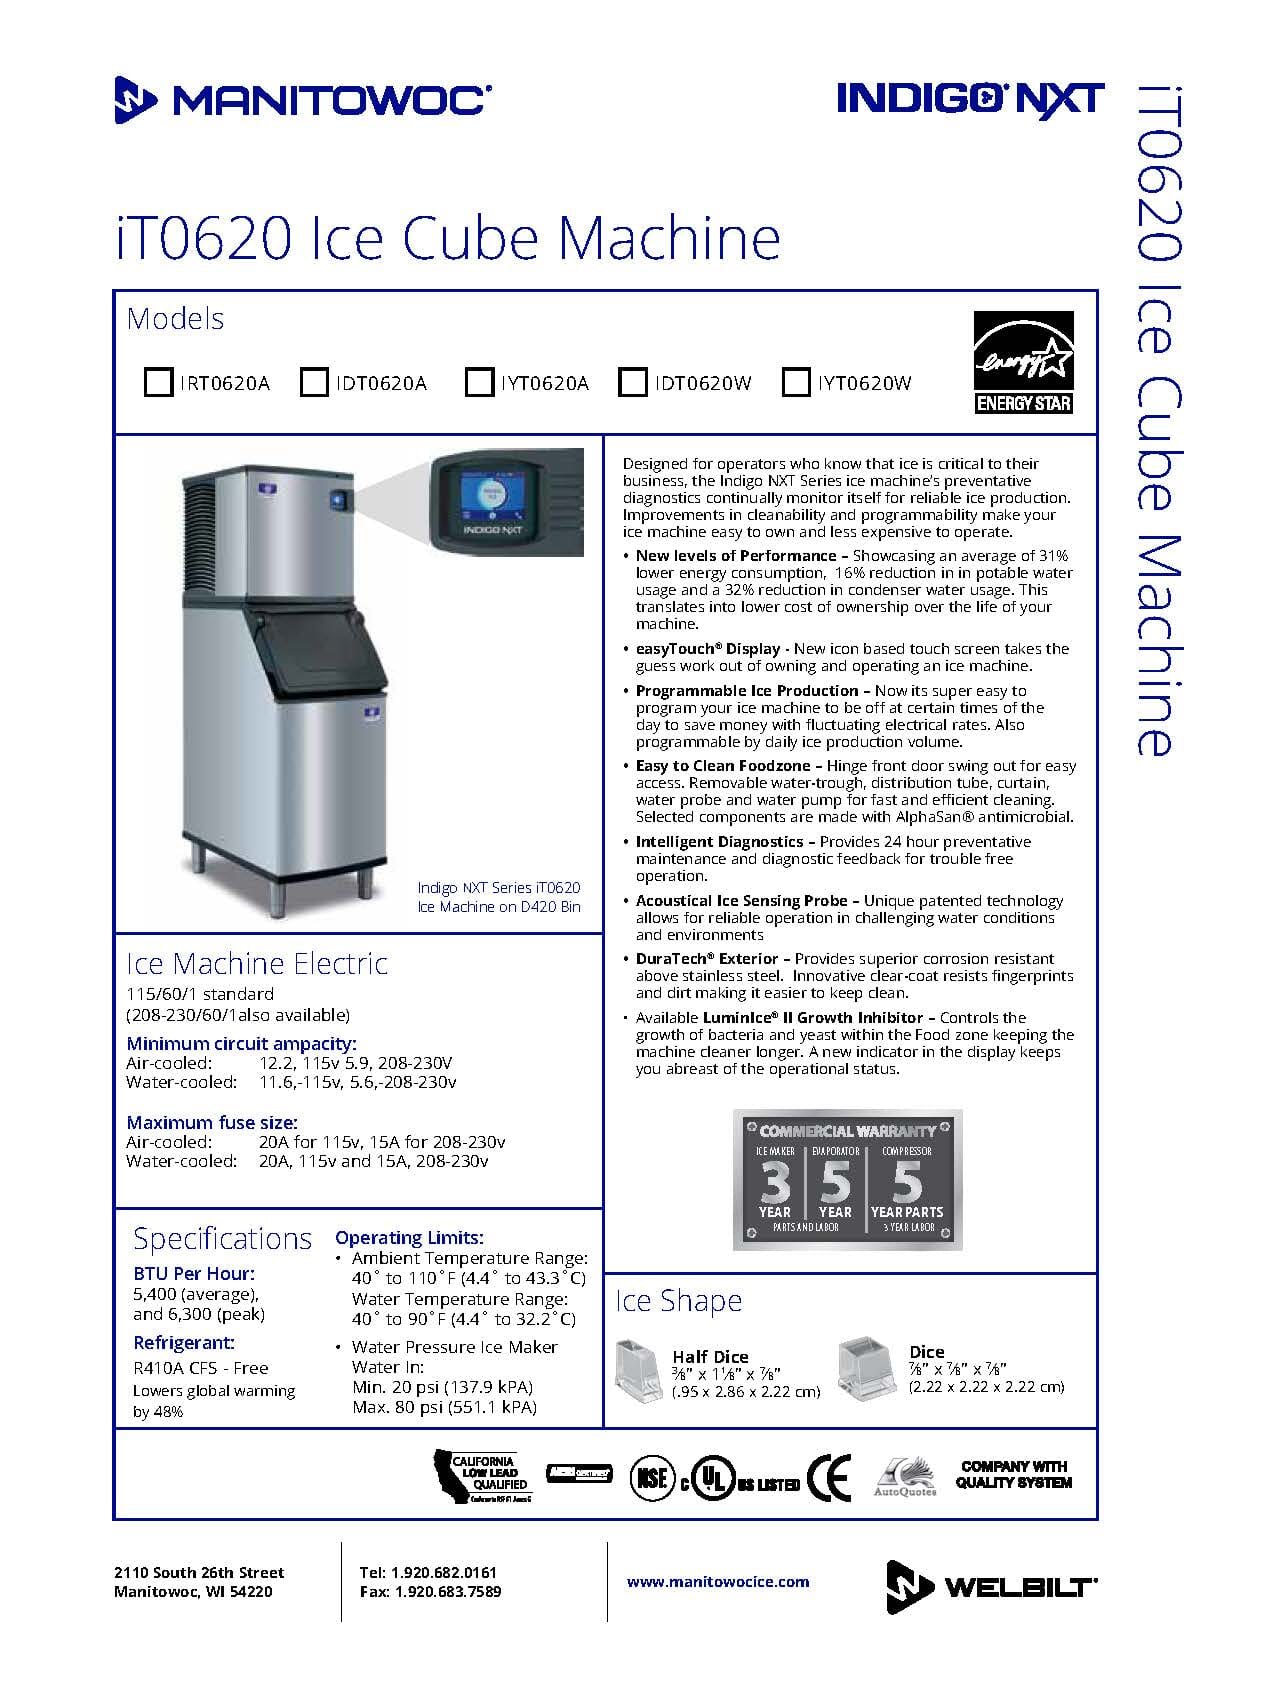 Manitowoc IYT0620A Indigo NXT 22" 575lb Air Cooled Half Dice Ice Machine Manitowoc 